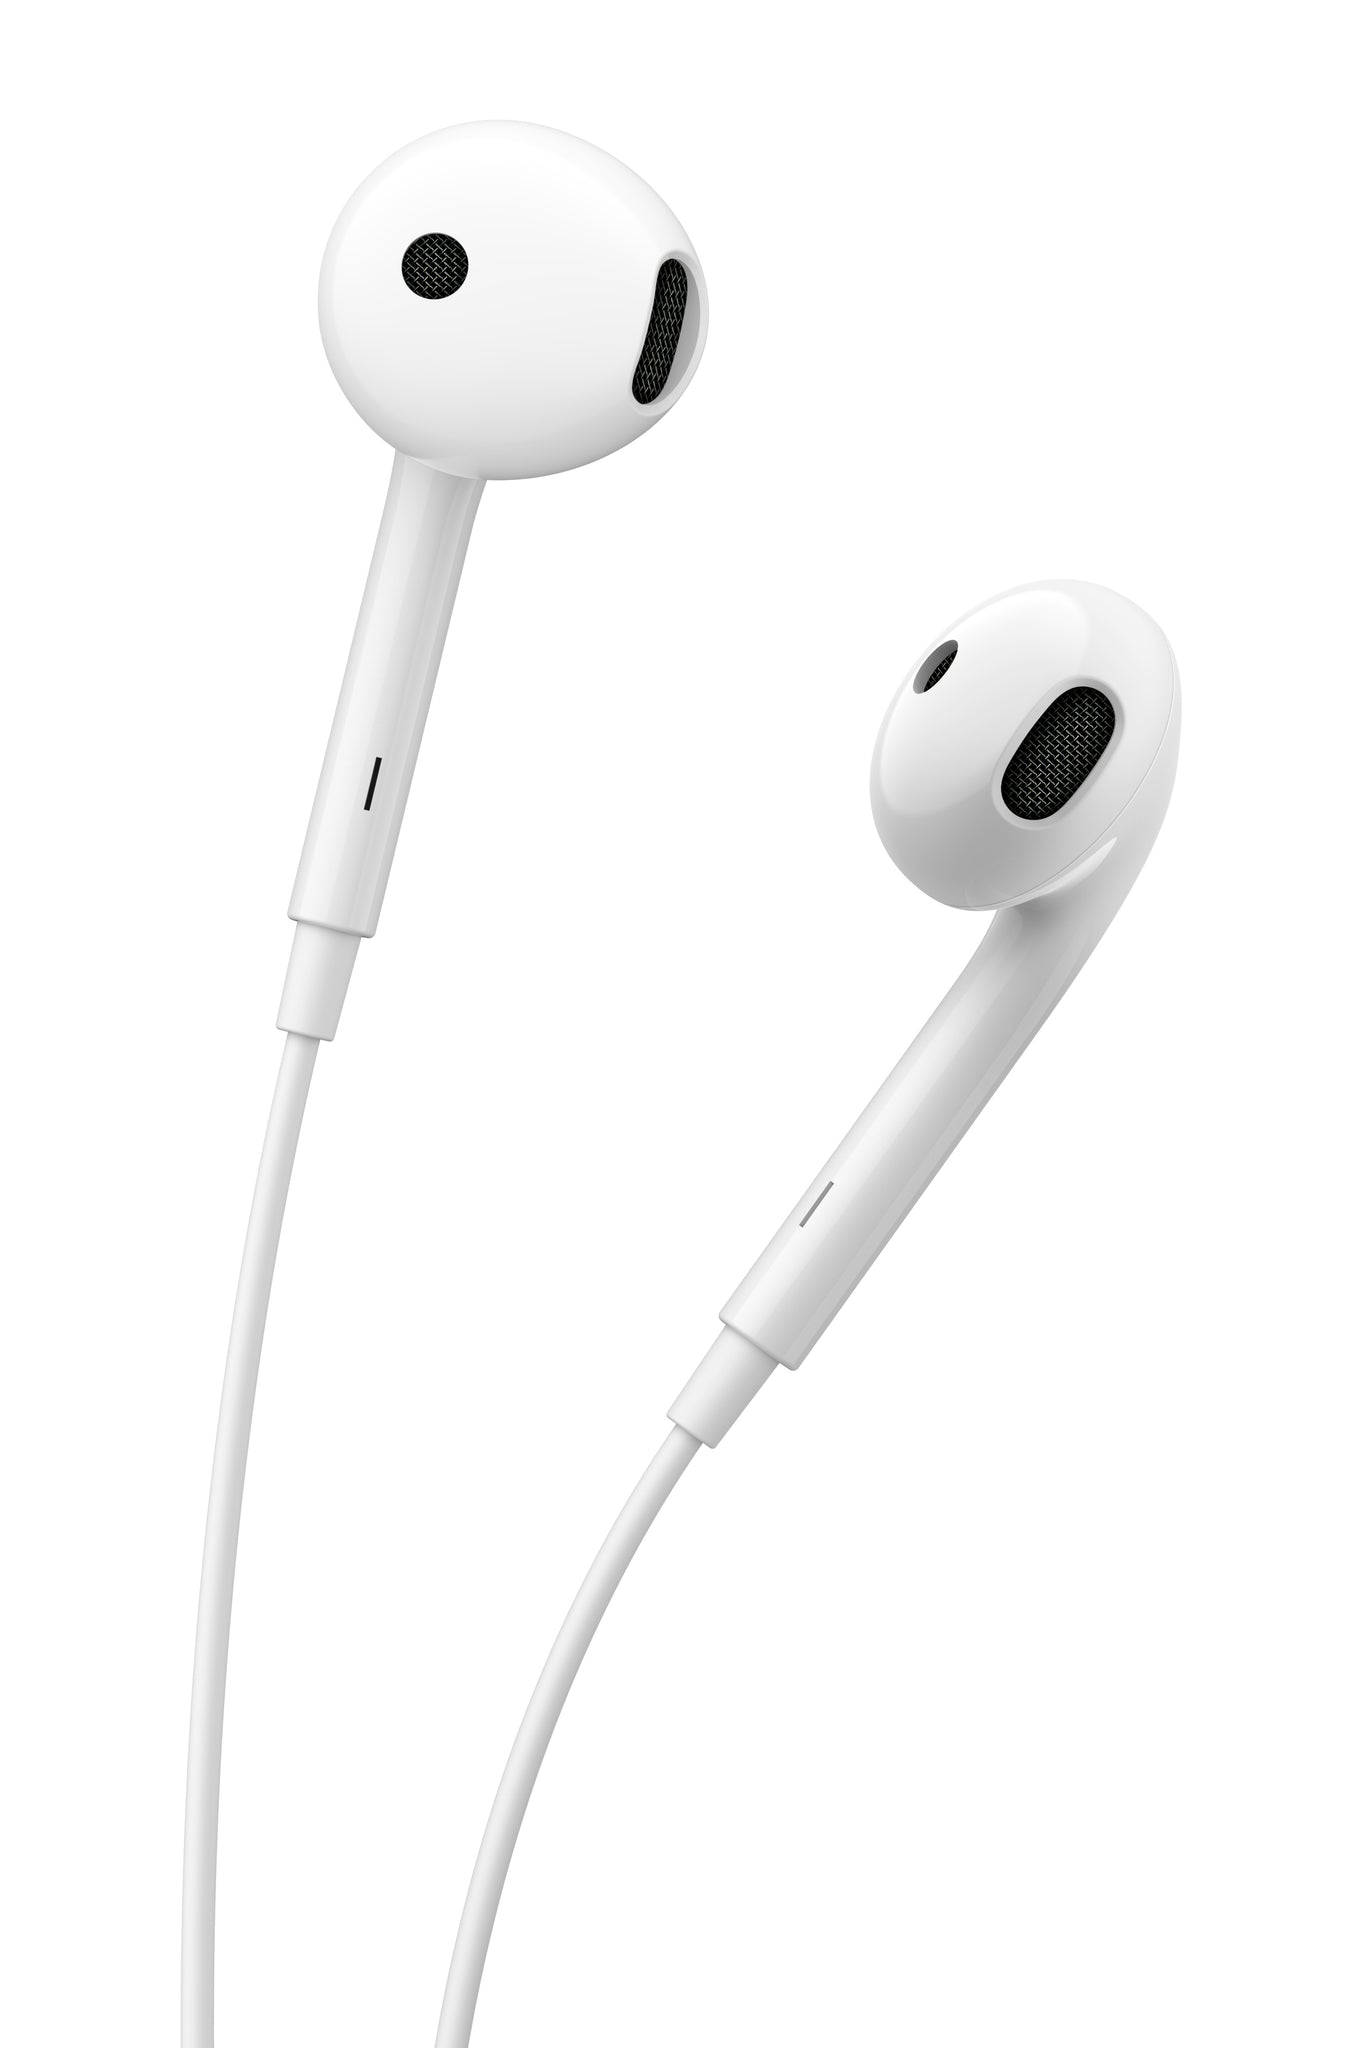 Edifier P180 USB-C Semi-In-Ear Hi-Res Earphones With Microphone - White